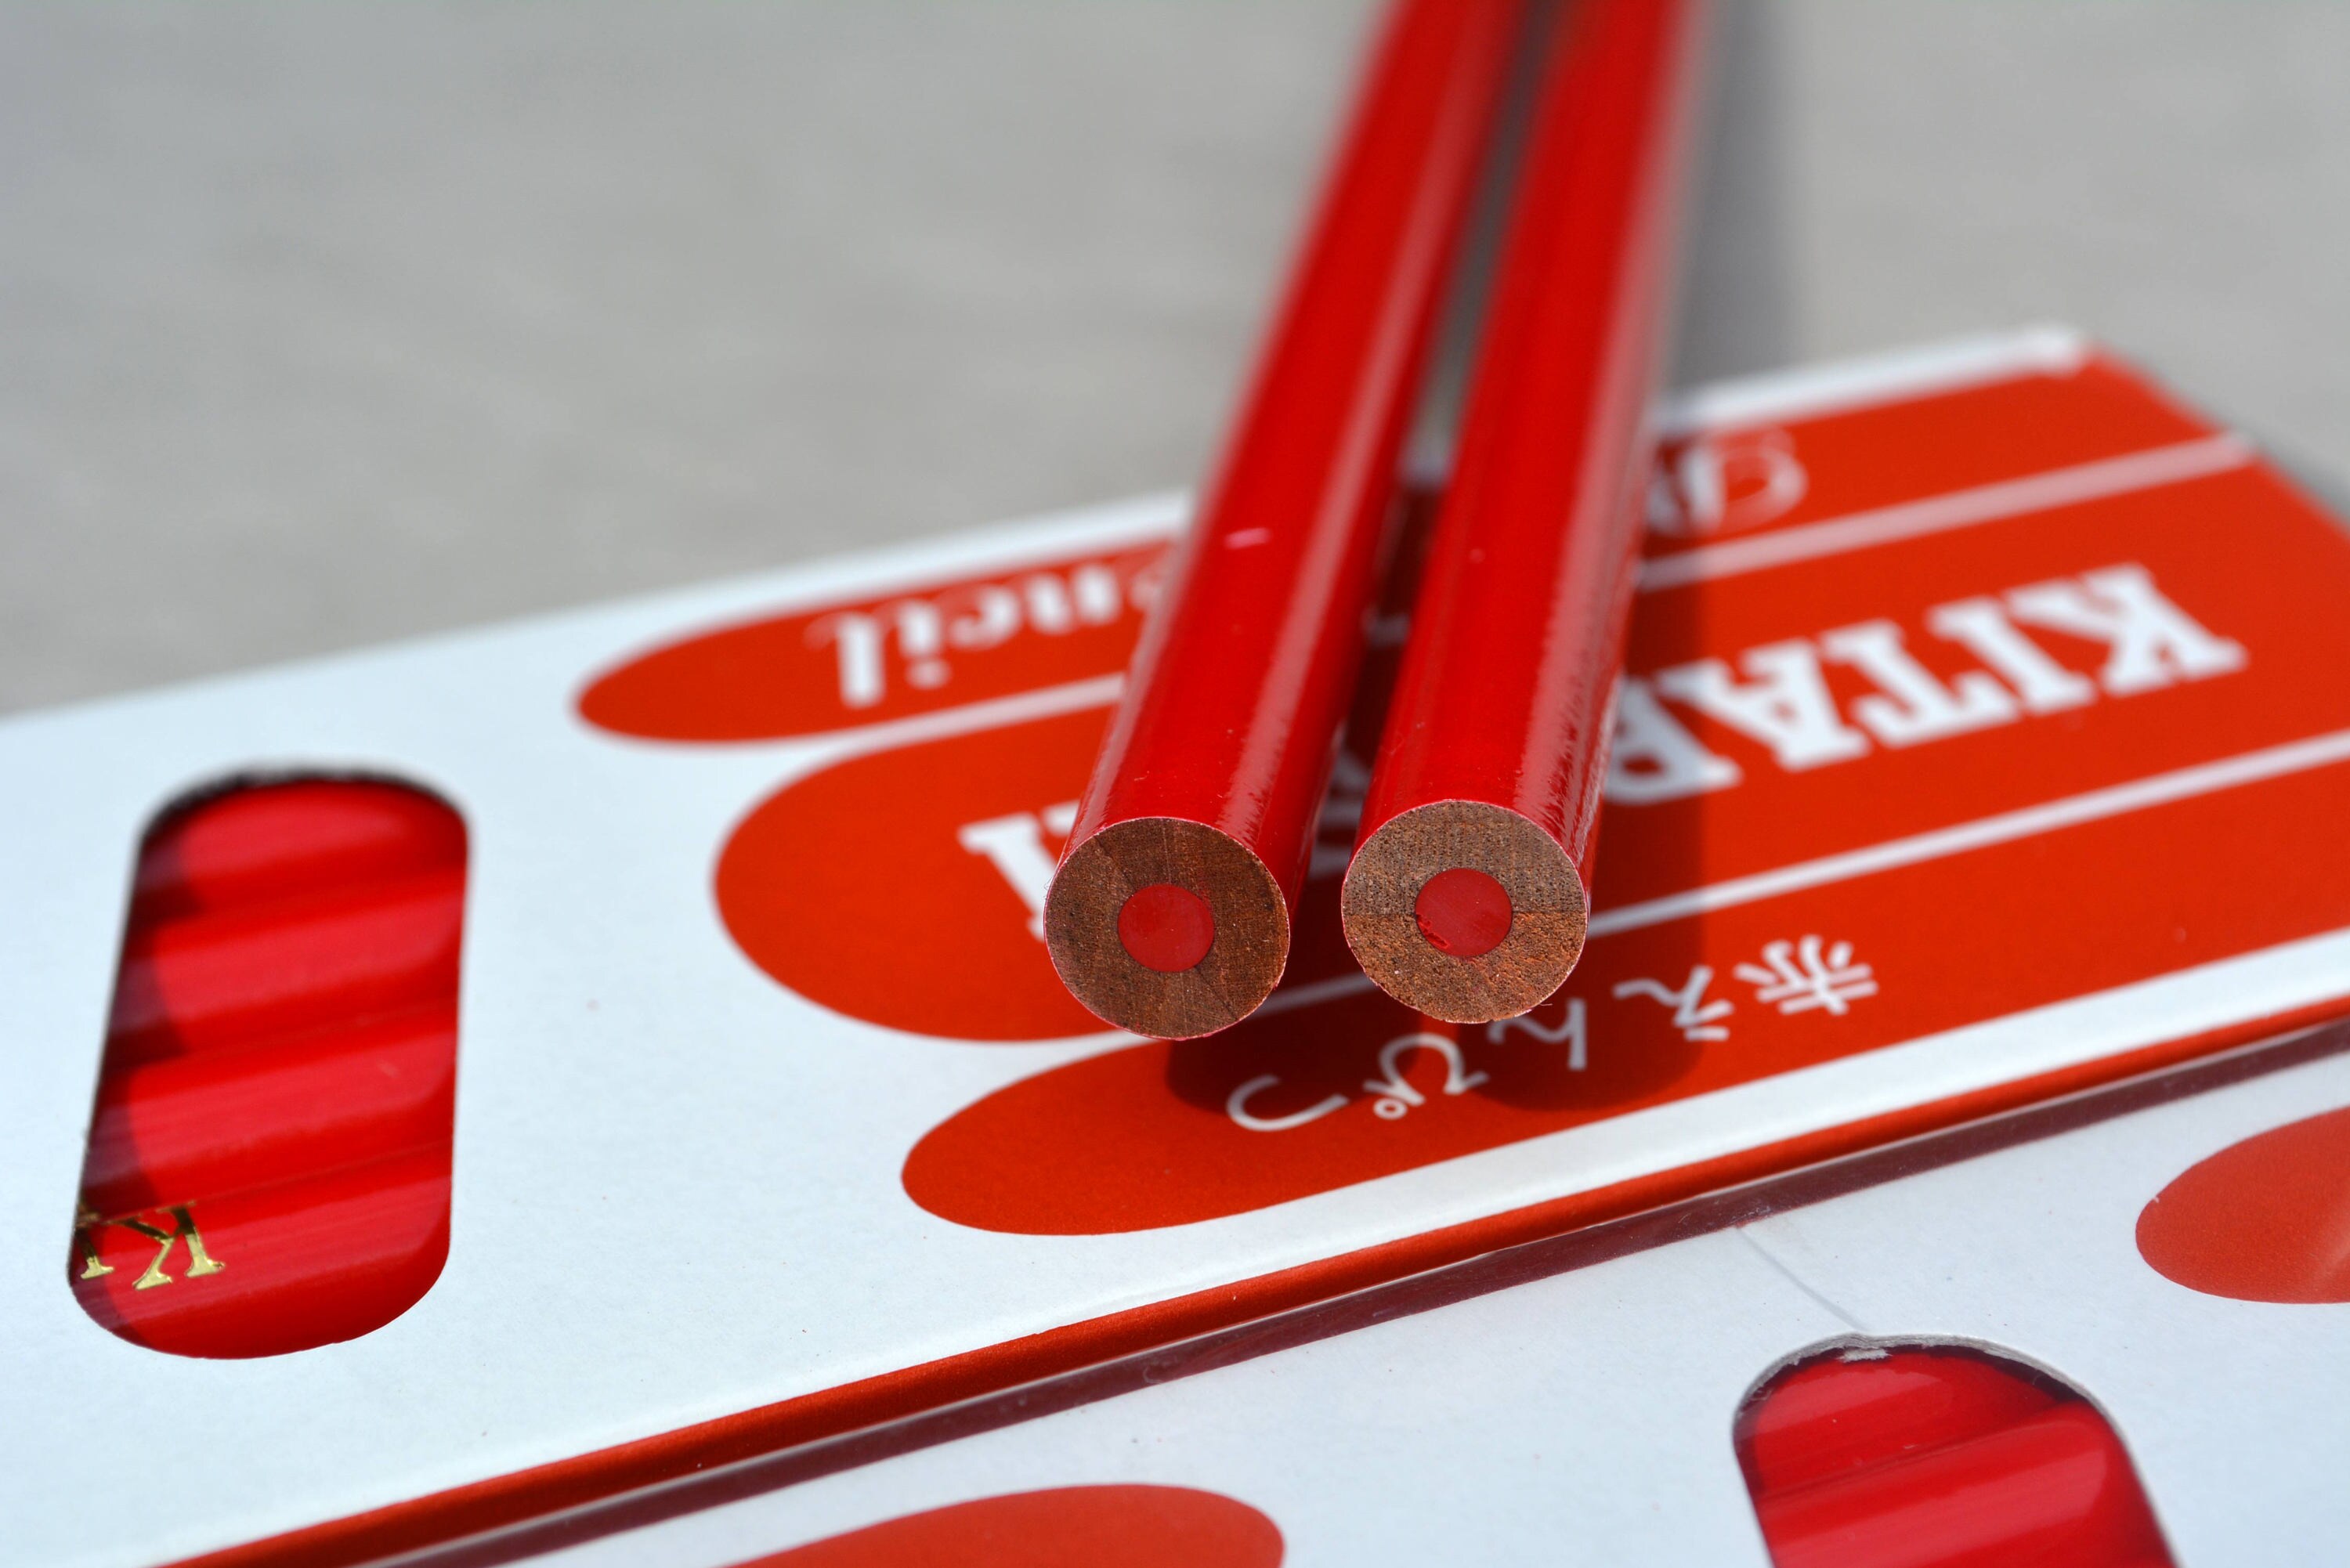 KITABOSHI 9352 Red Marking Pencils 12 Pack Made in Japan 